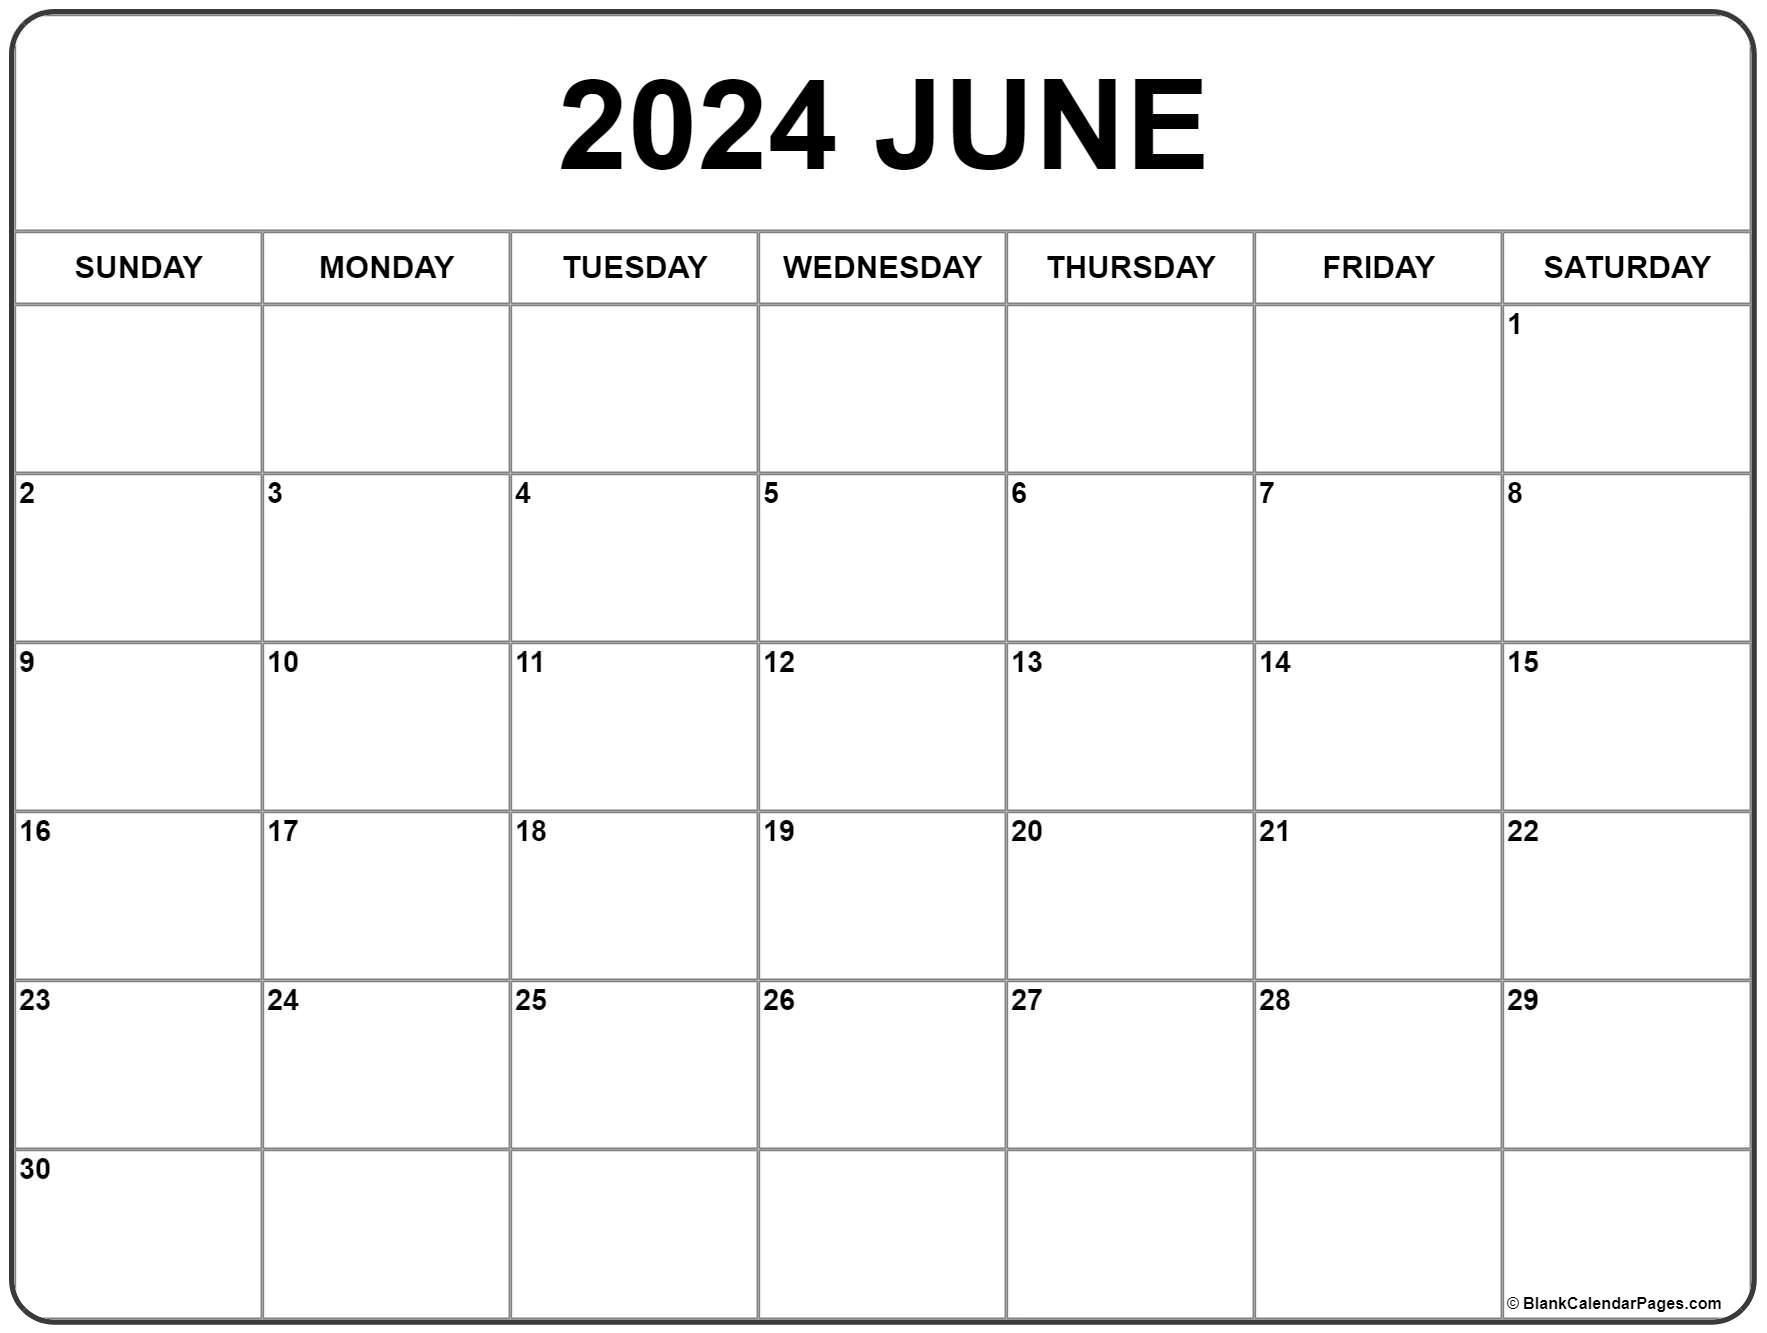 Blank June 2021 Calendar June 2021 calendar | free printable monthly calendars